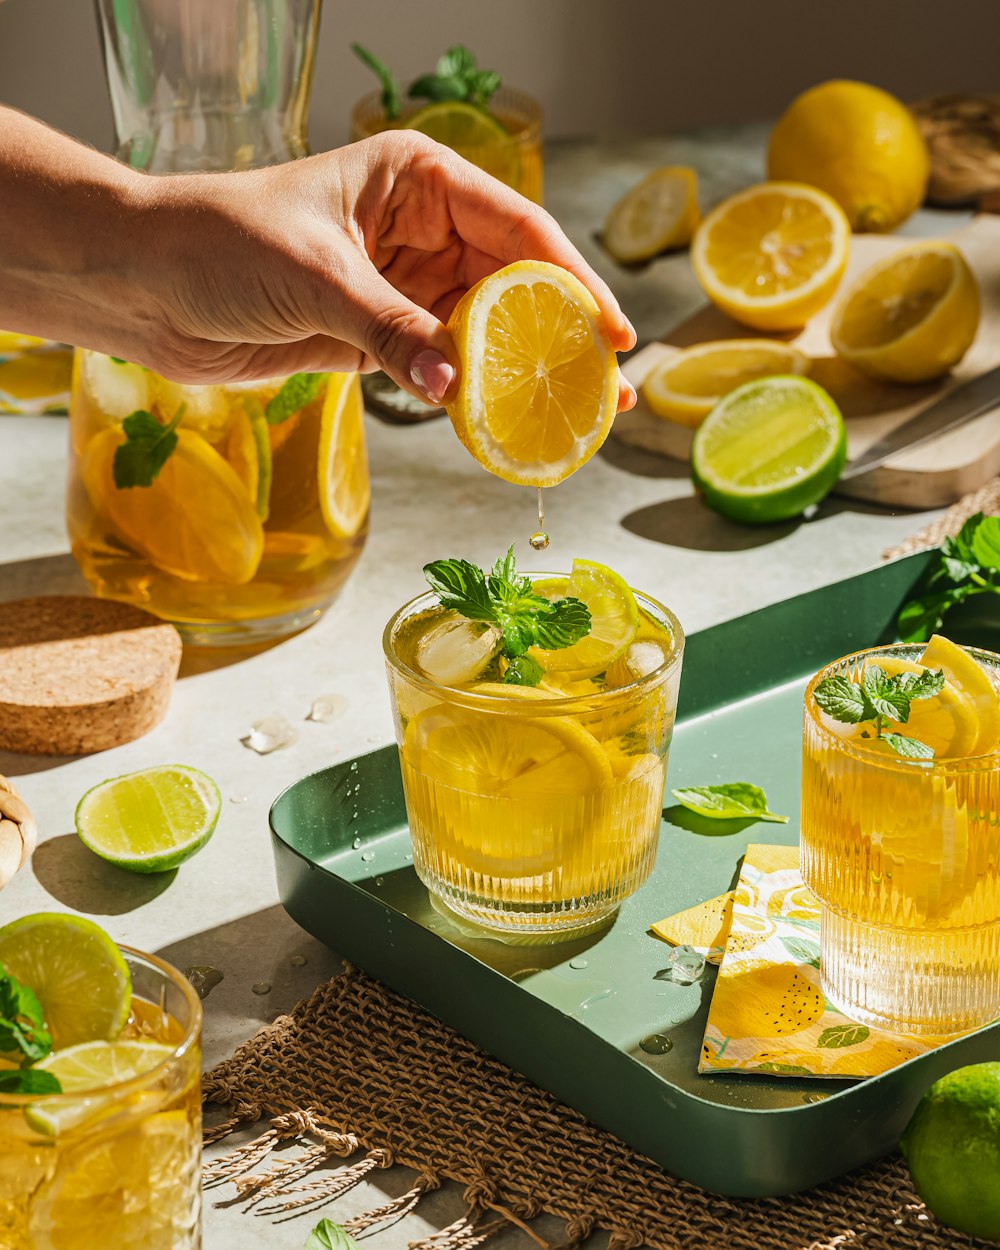 a hand holding a lemon over a glass of lemonade